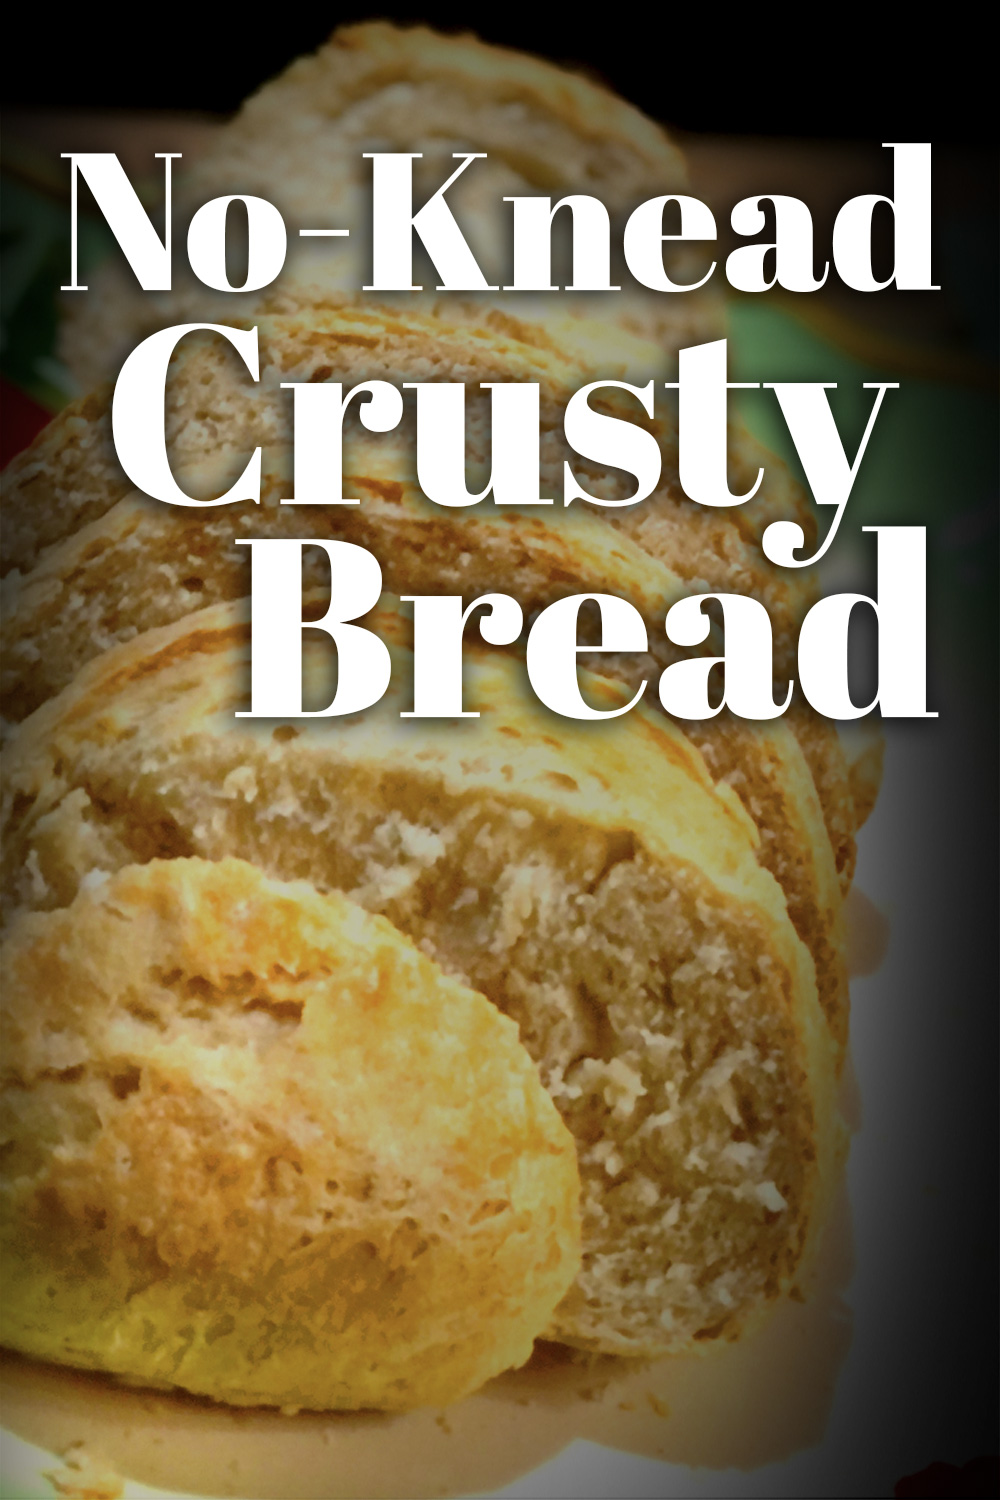 No-knead Crusty Bread